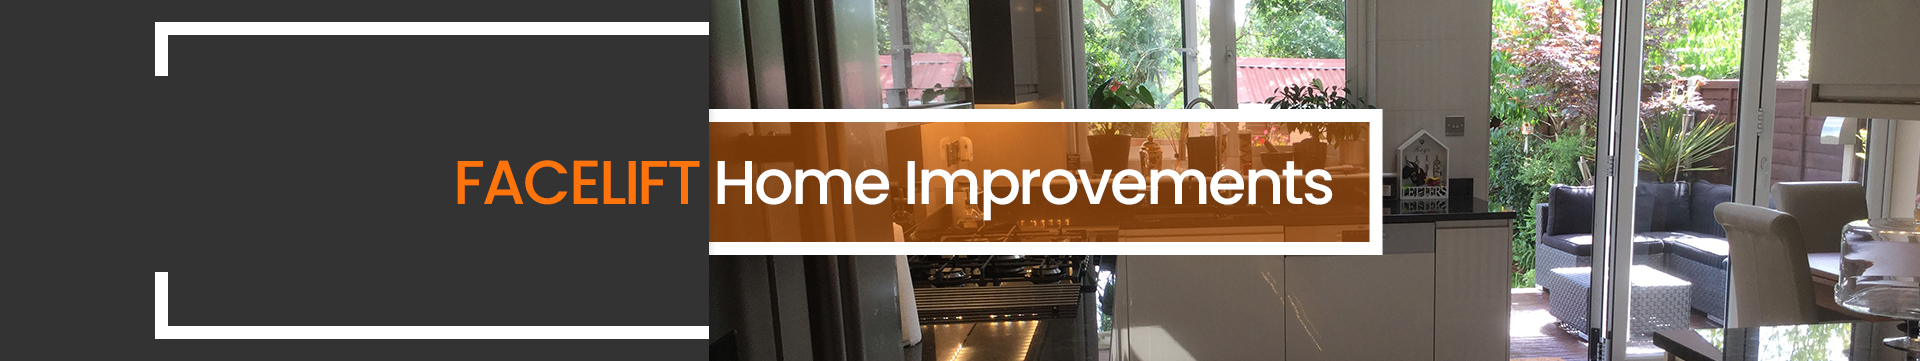 facelift home improvements cat banner Facelift